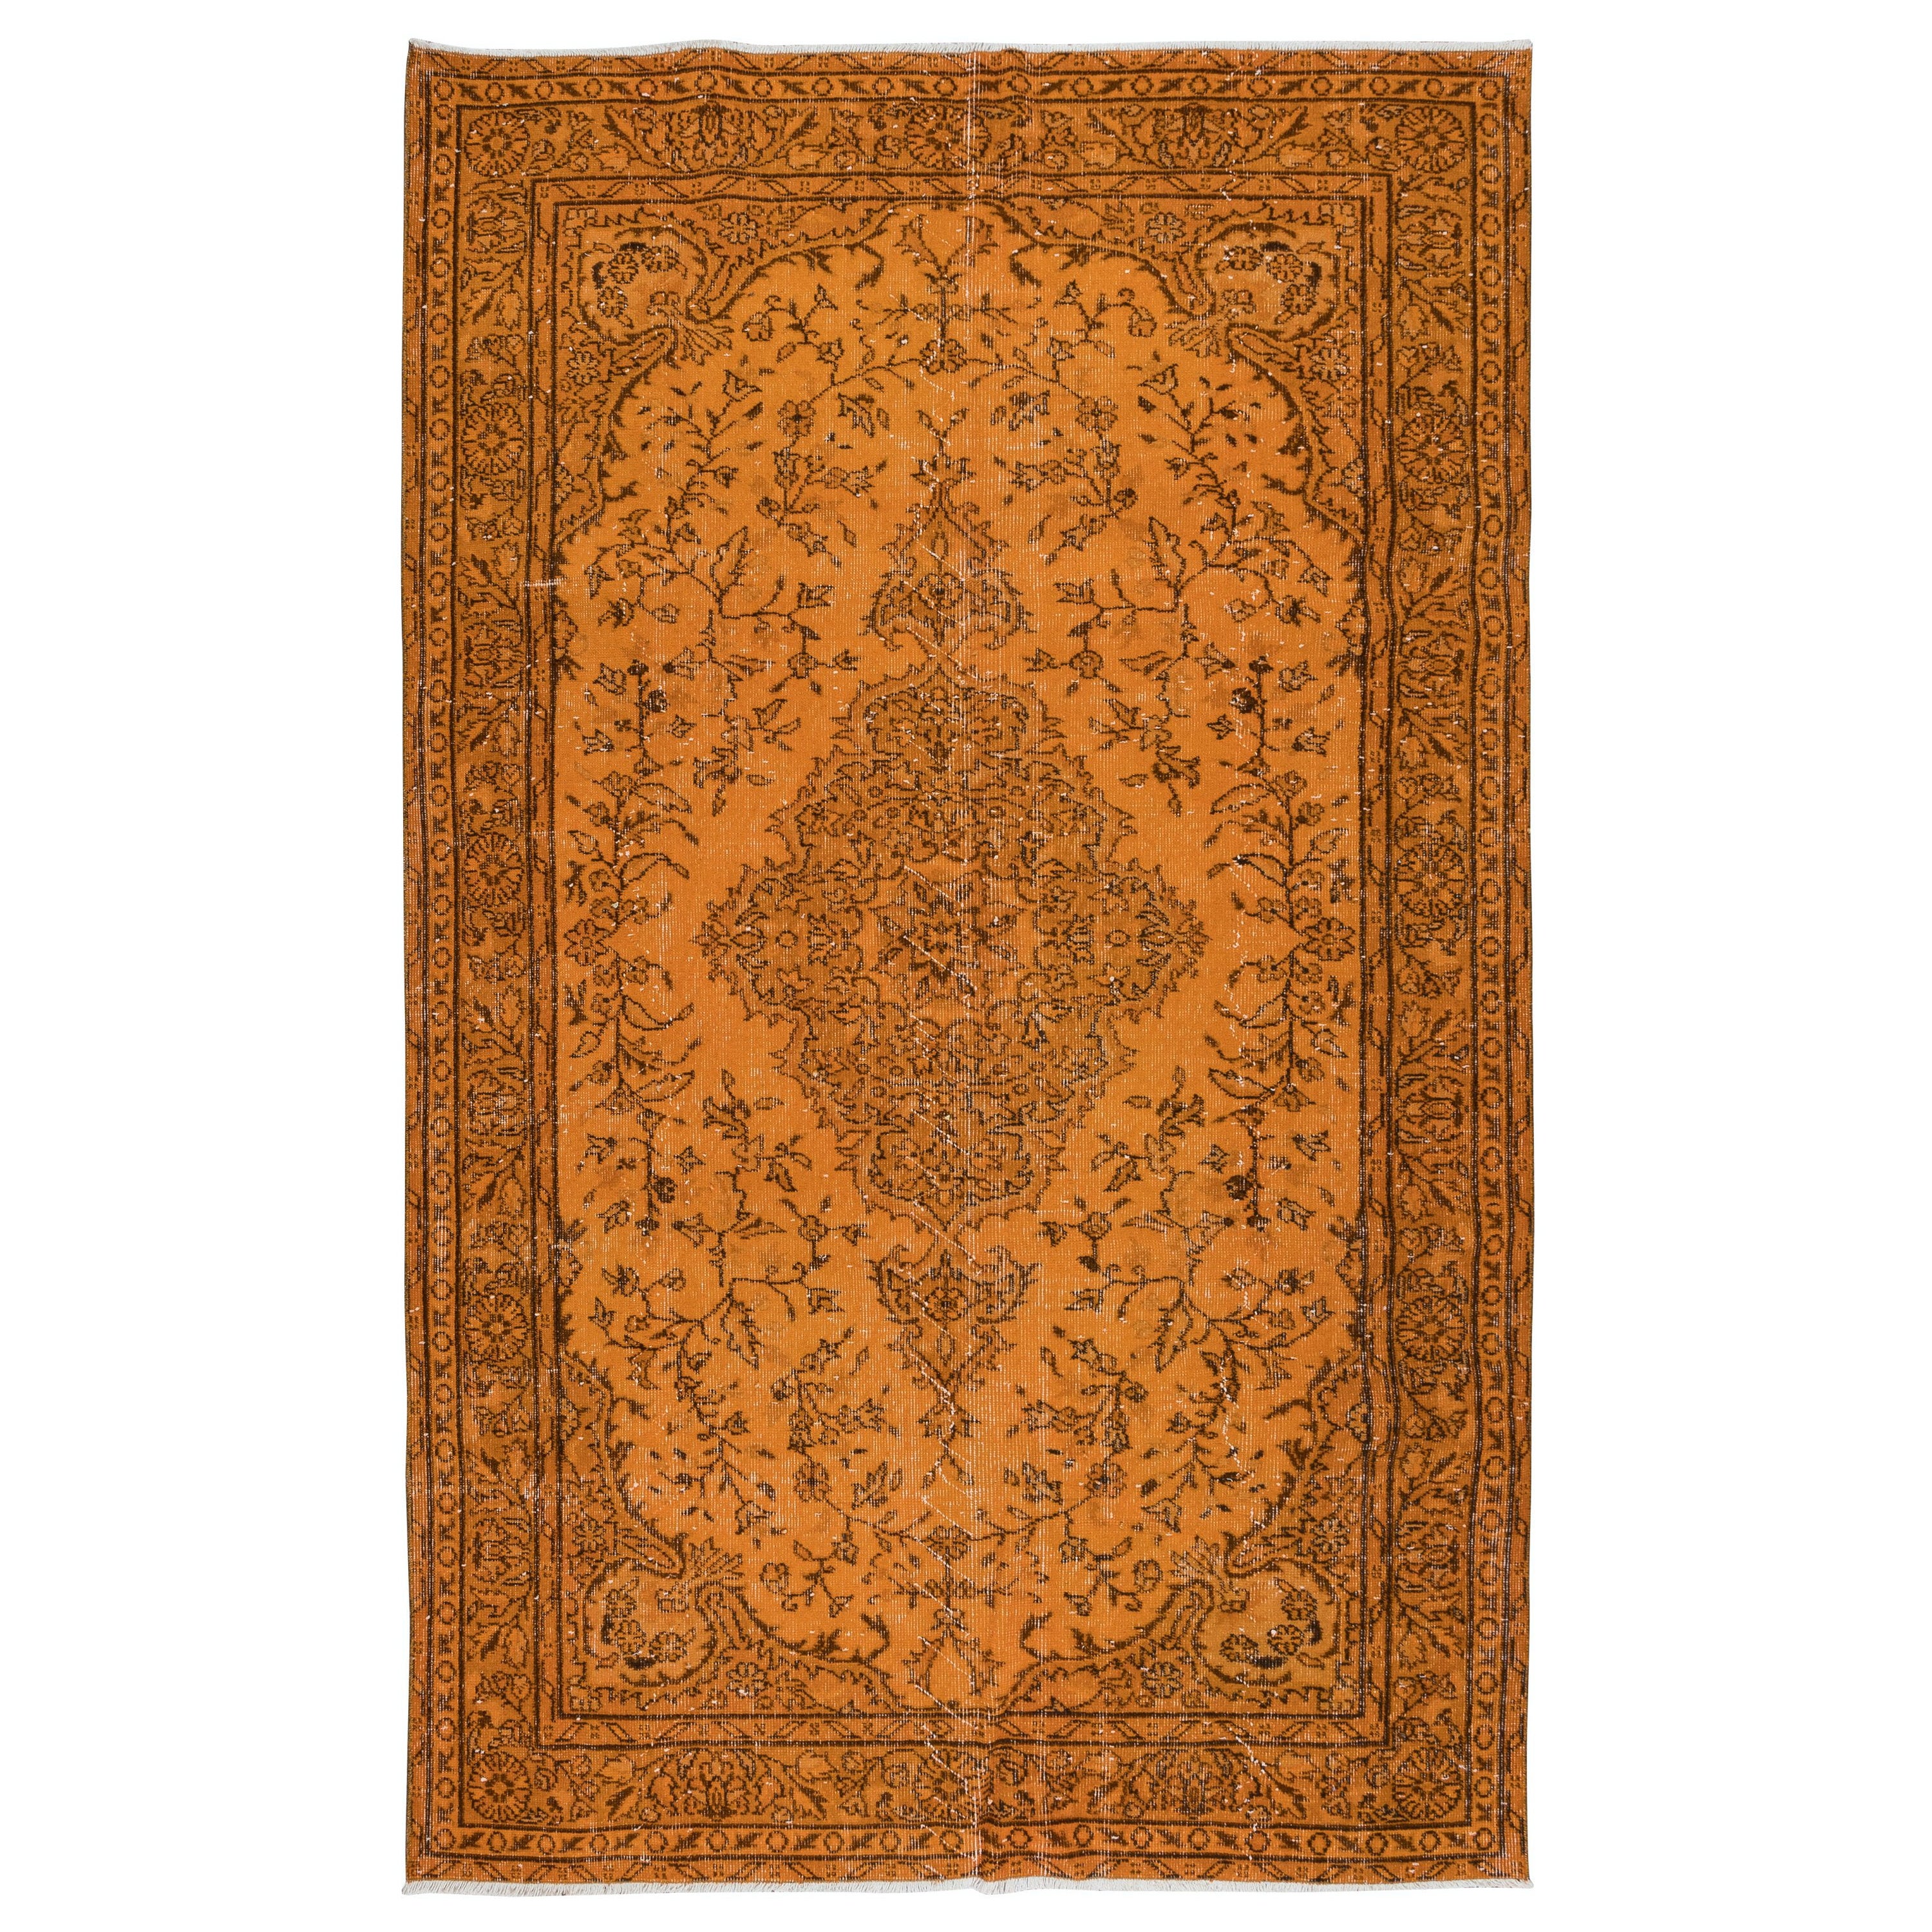 5.7x9 Ft Decorative Turkish Orange Rug, Modern Handmade Wool Carpet For Sale